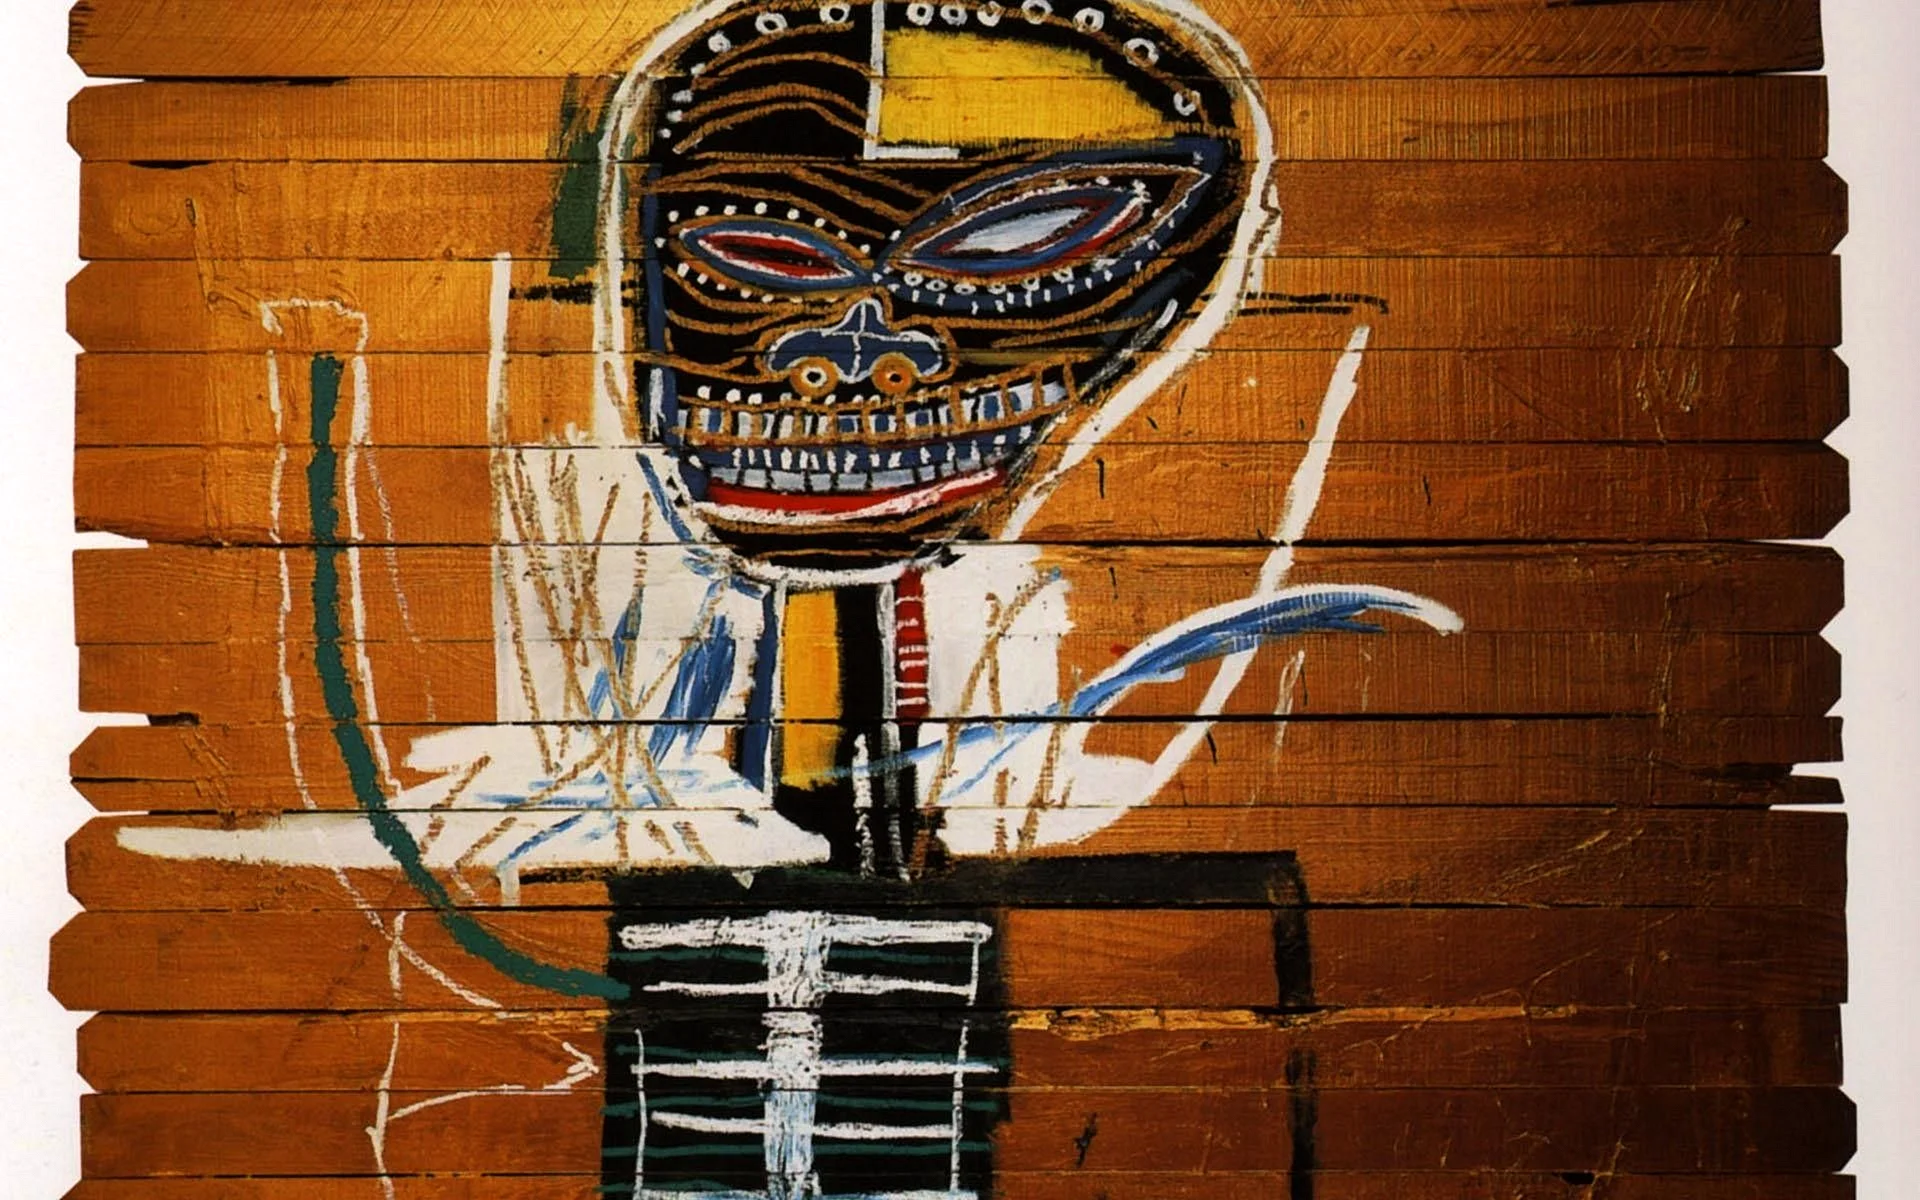 Jean-Michel Basquiat Wallpaper